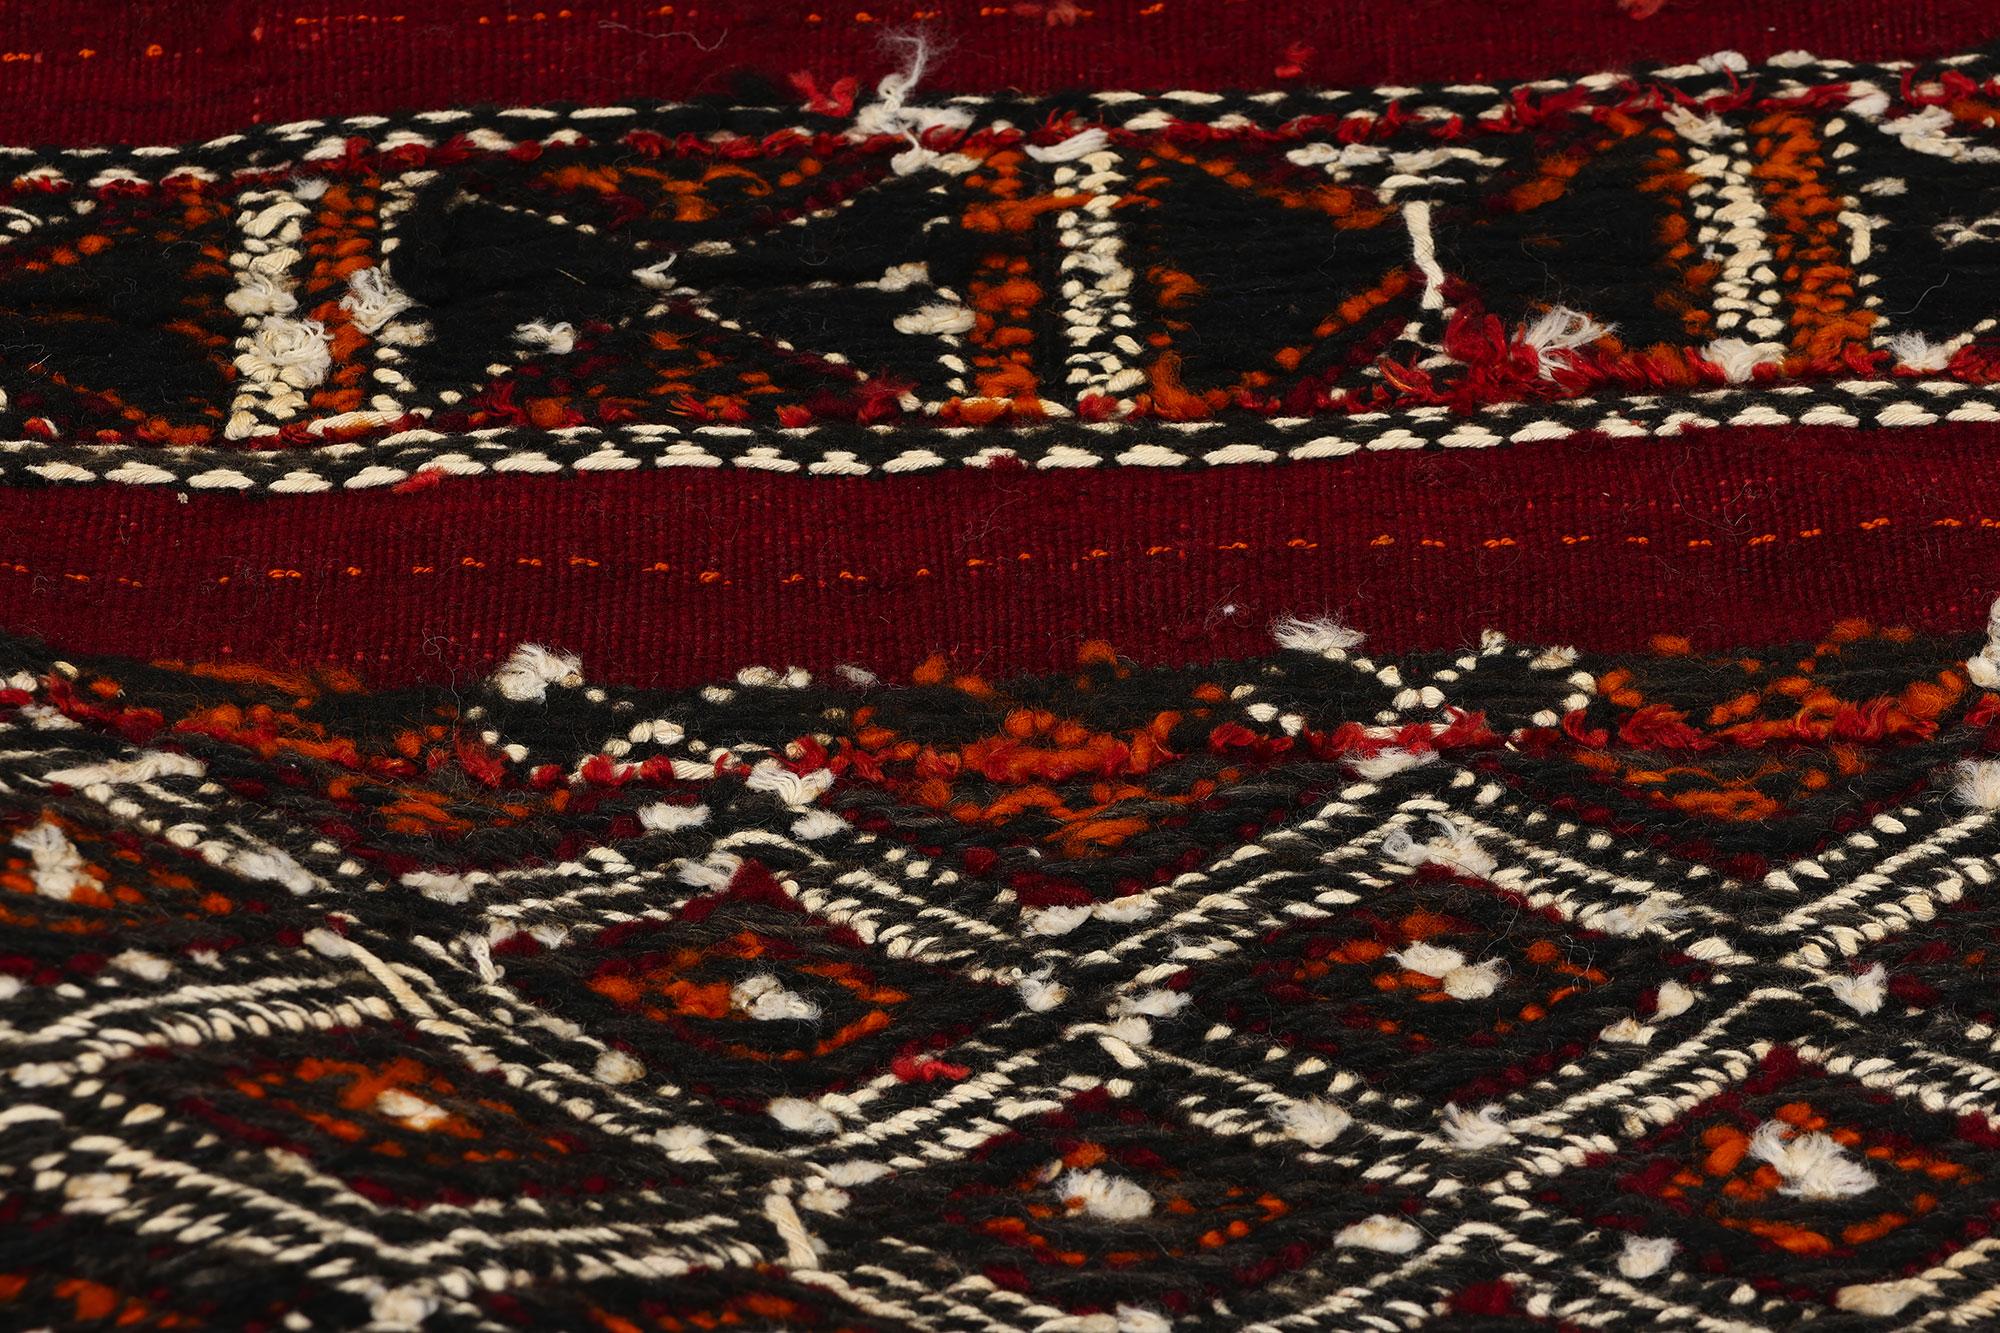 Mid-Century Modern Midcentury Bohemian Vintage Moroccan Zemmour Kilim Berber Rug, 03'02 x 23'02 For Sale